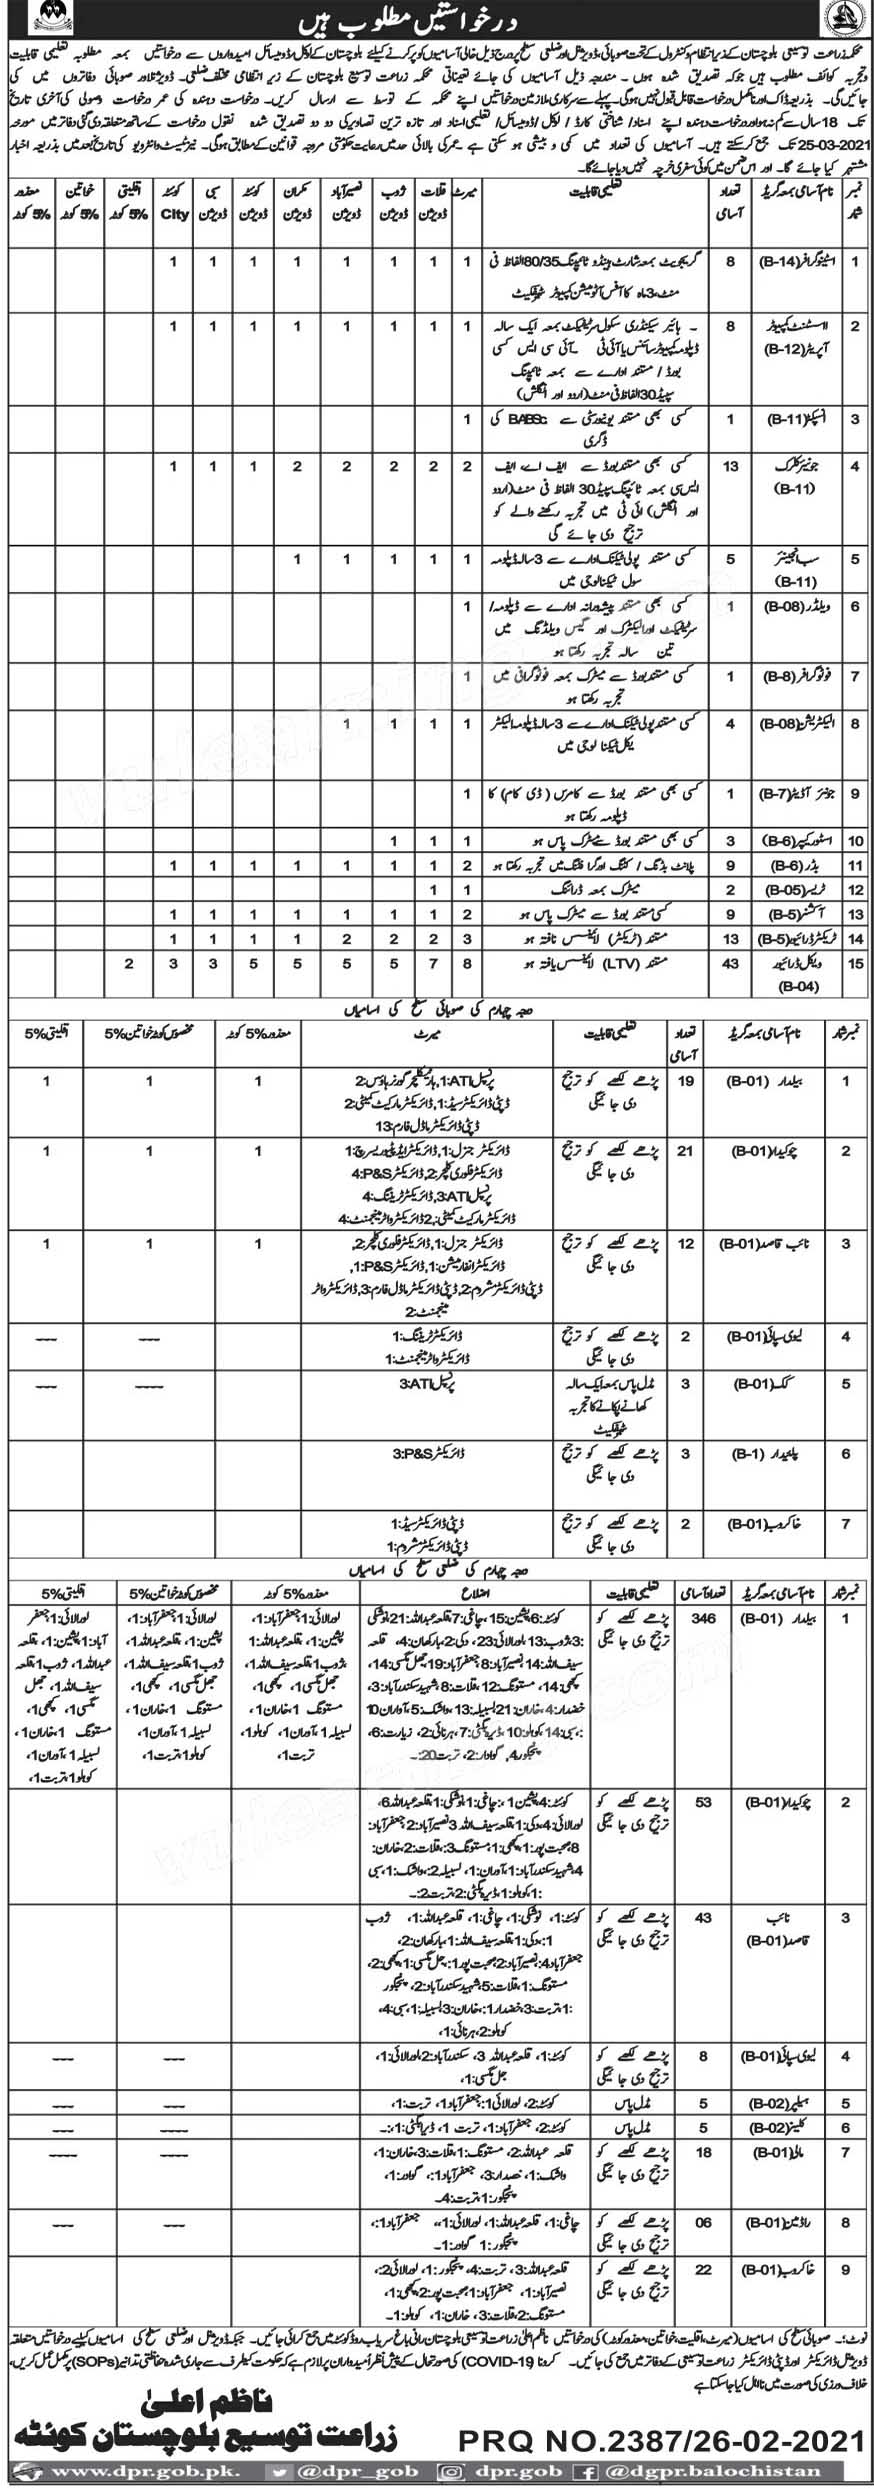 Latest Agriculture Department jobs in Quetta Balochistan Pakistan Feb 2021